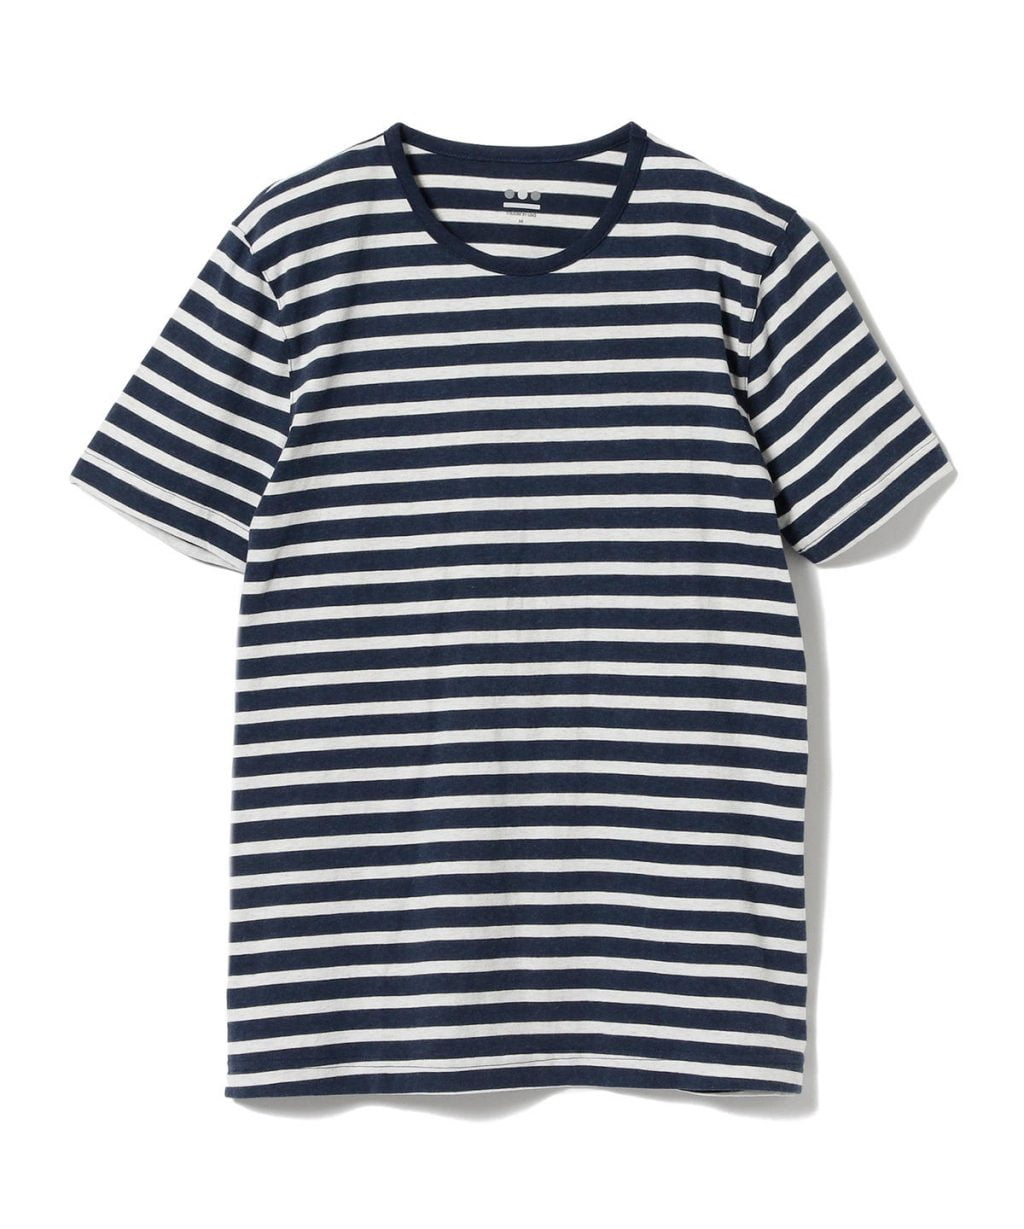 【2019SS】セレクトショップのおすすめTシャツをレビュー！ - 大人のためのファッションブログ